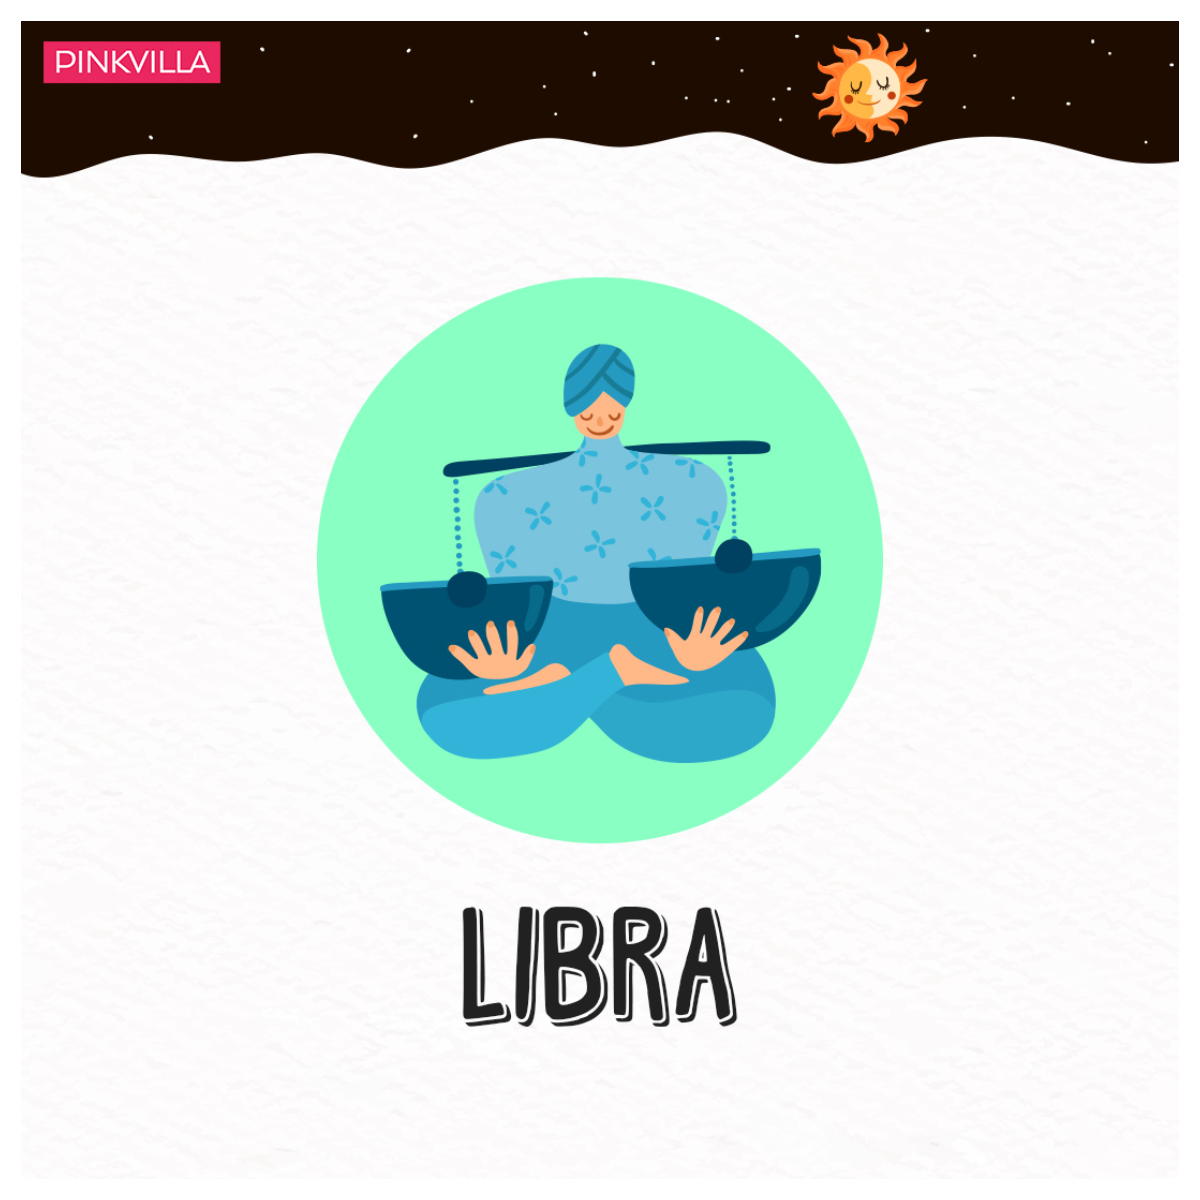 Leo to Libra: Top 5 best zodiac signs